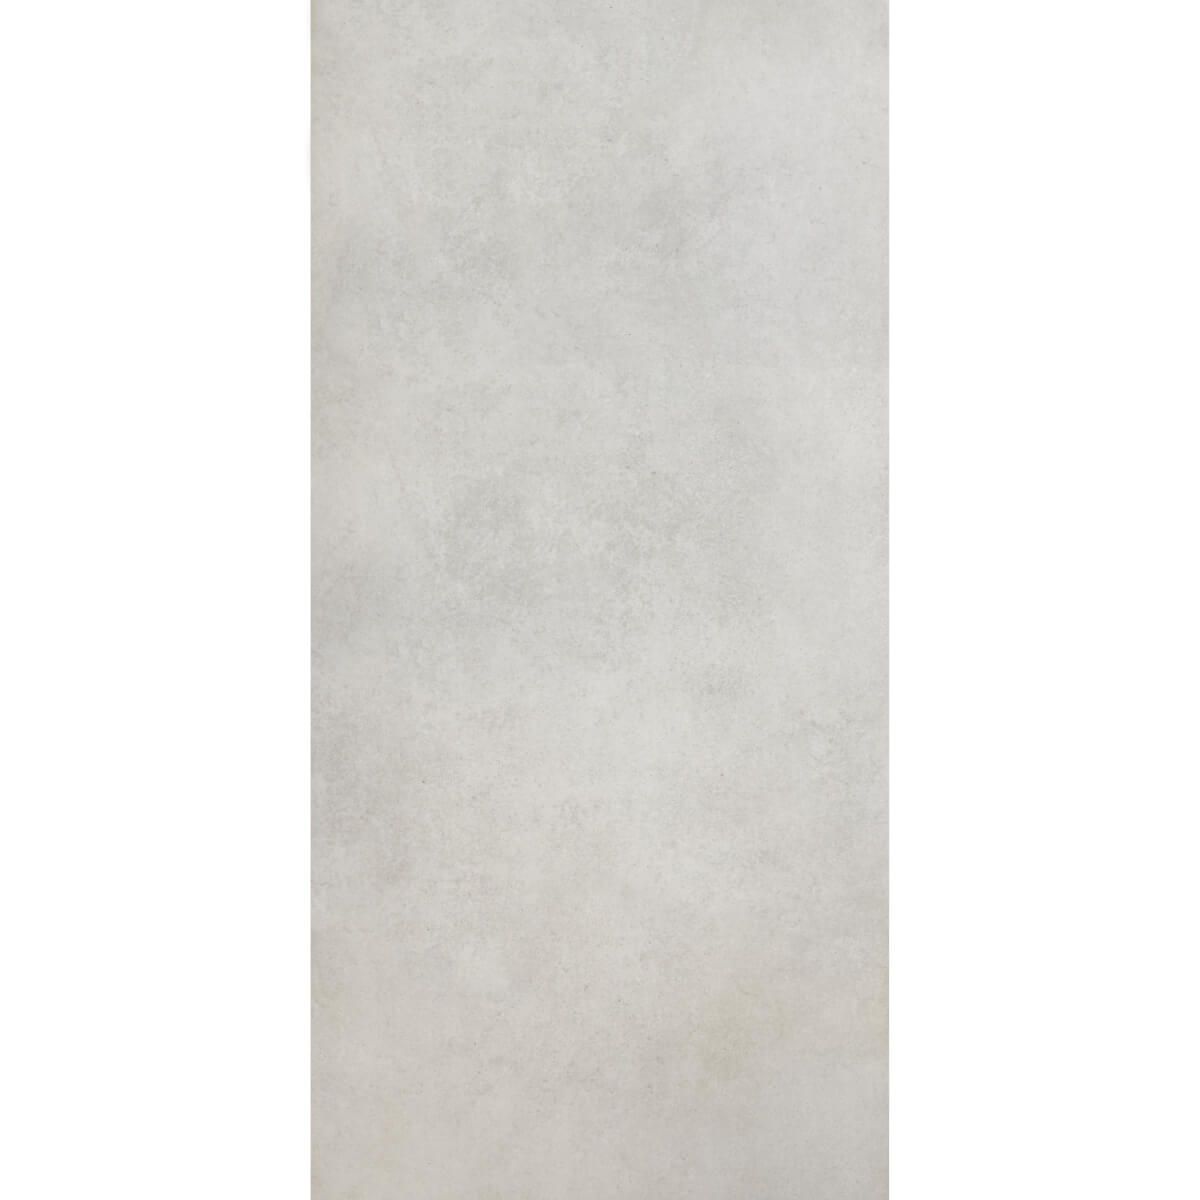 Gres 20MM Marbella White matowy 120x60x2 cm